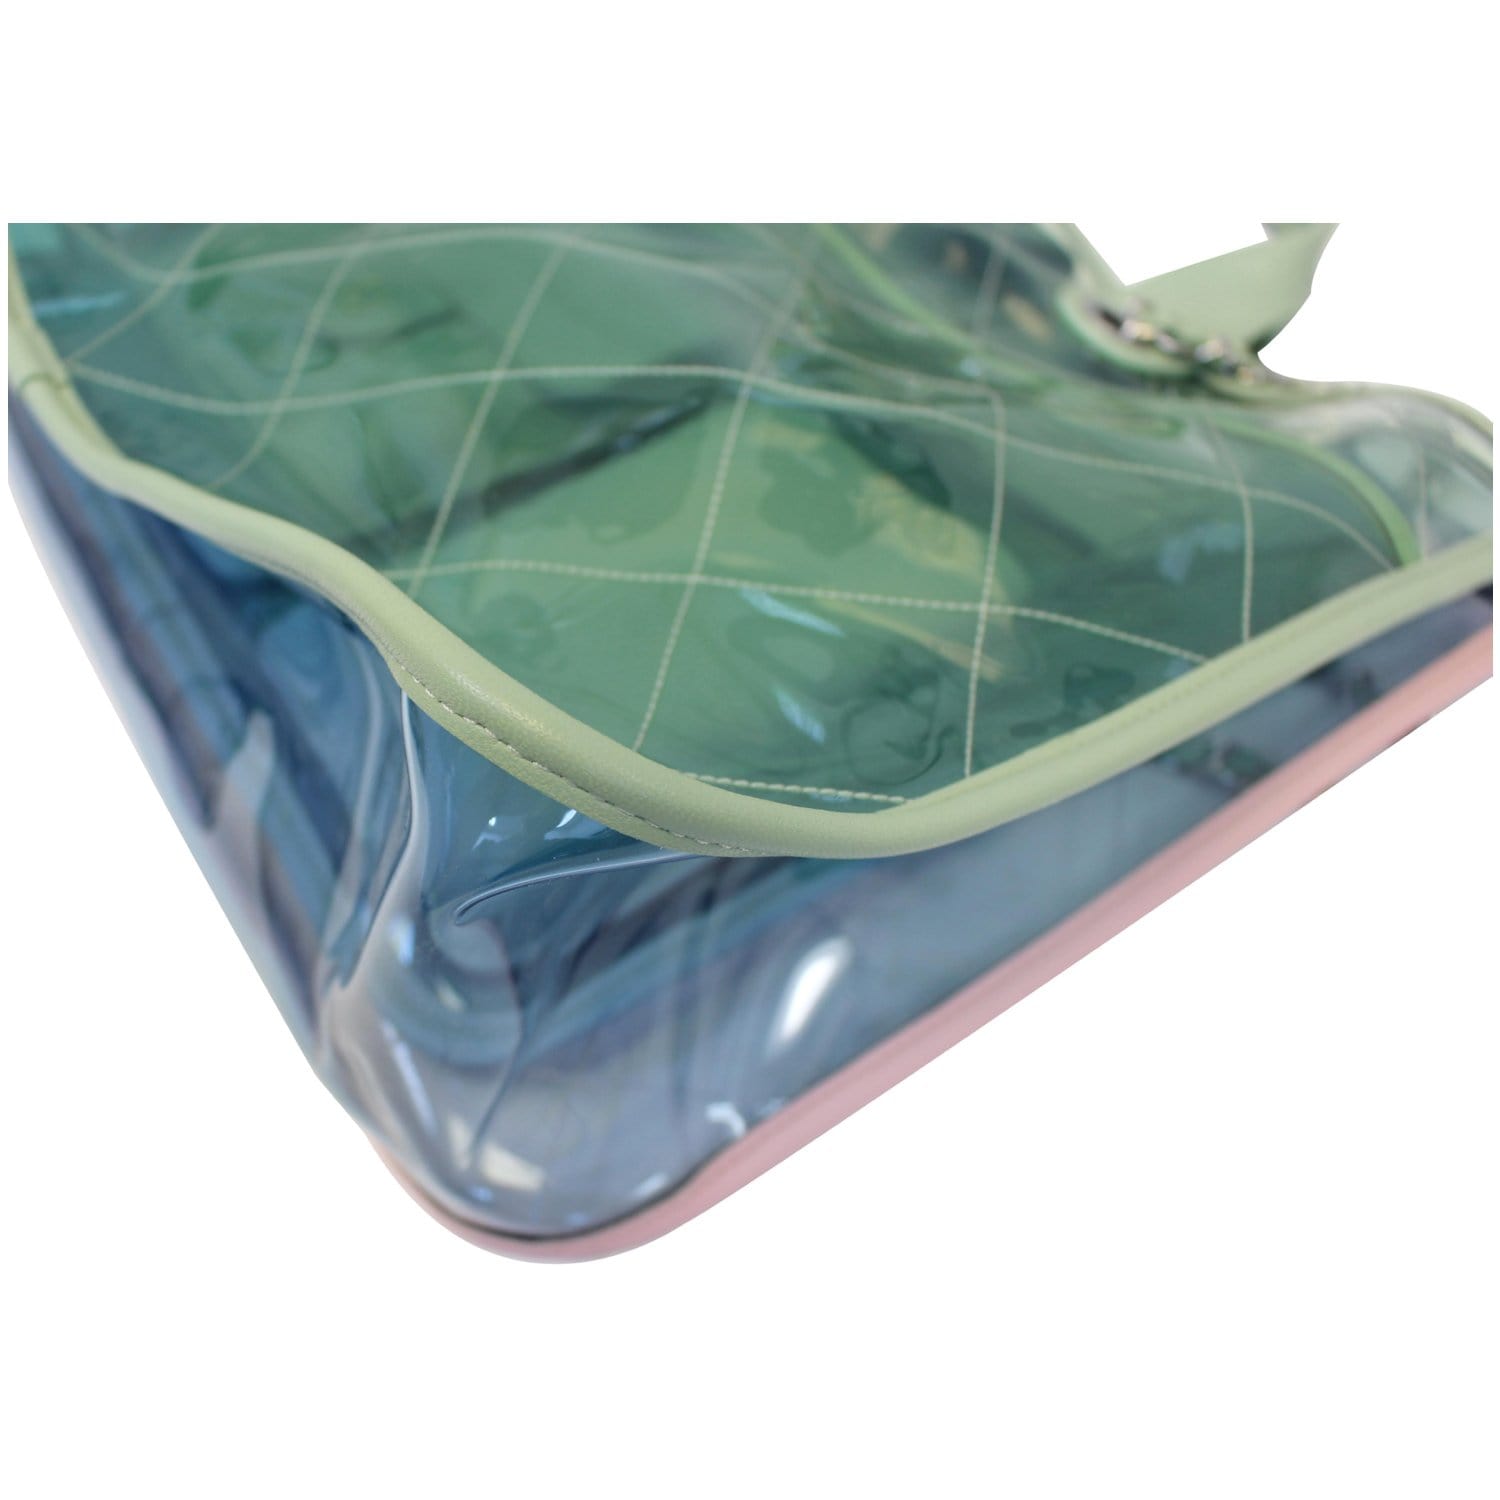 PVC Lambskin Stitched Coco Splash Shopping Bag Blue Green Pink